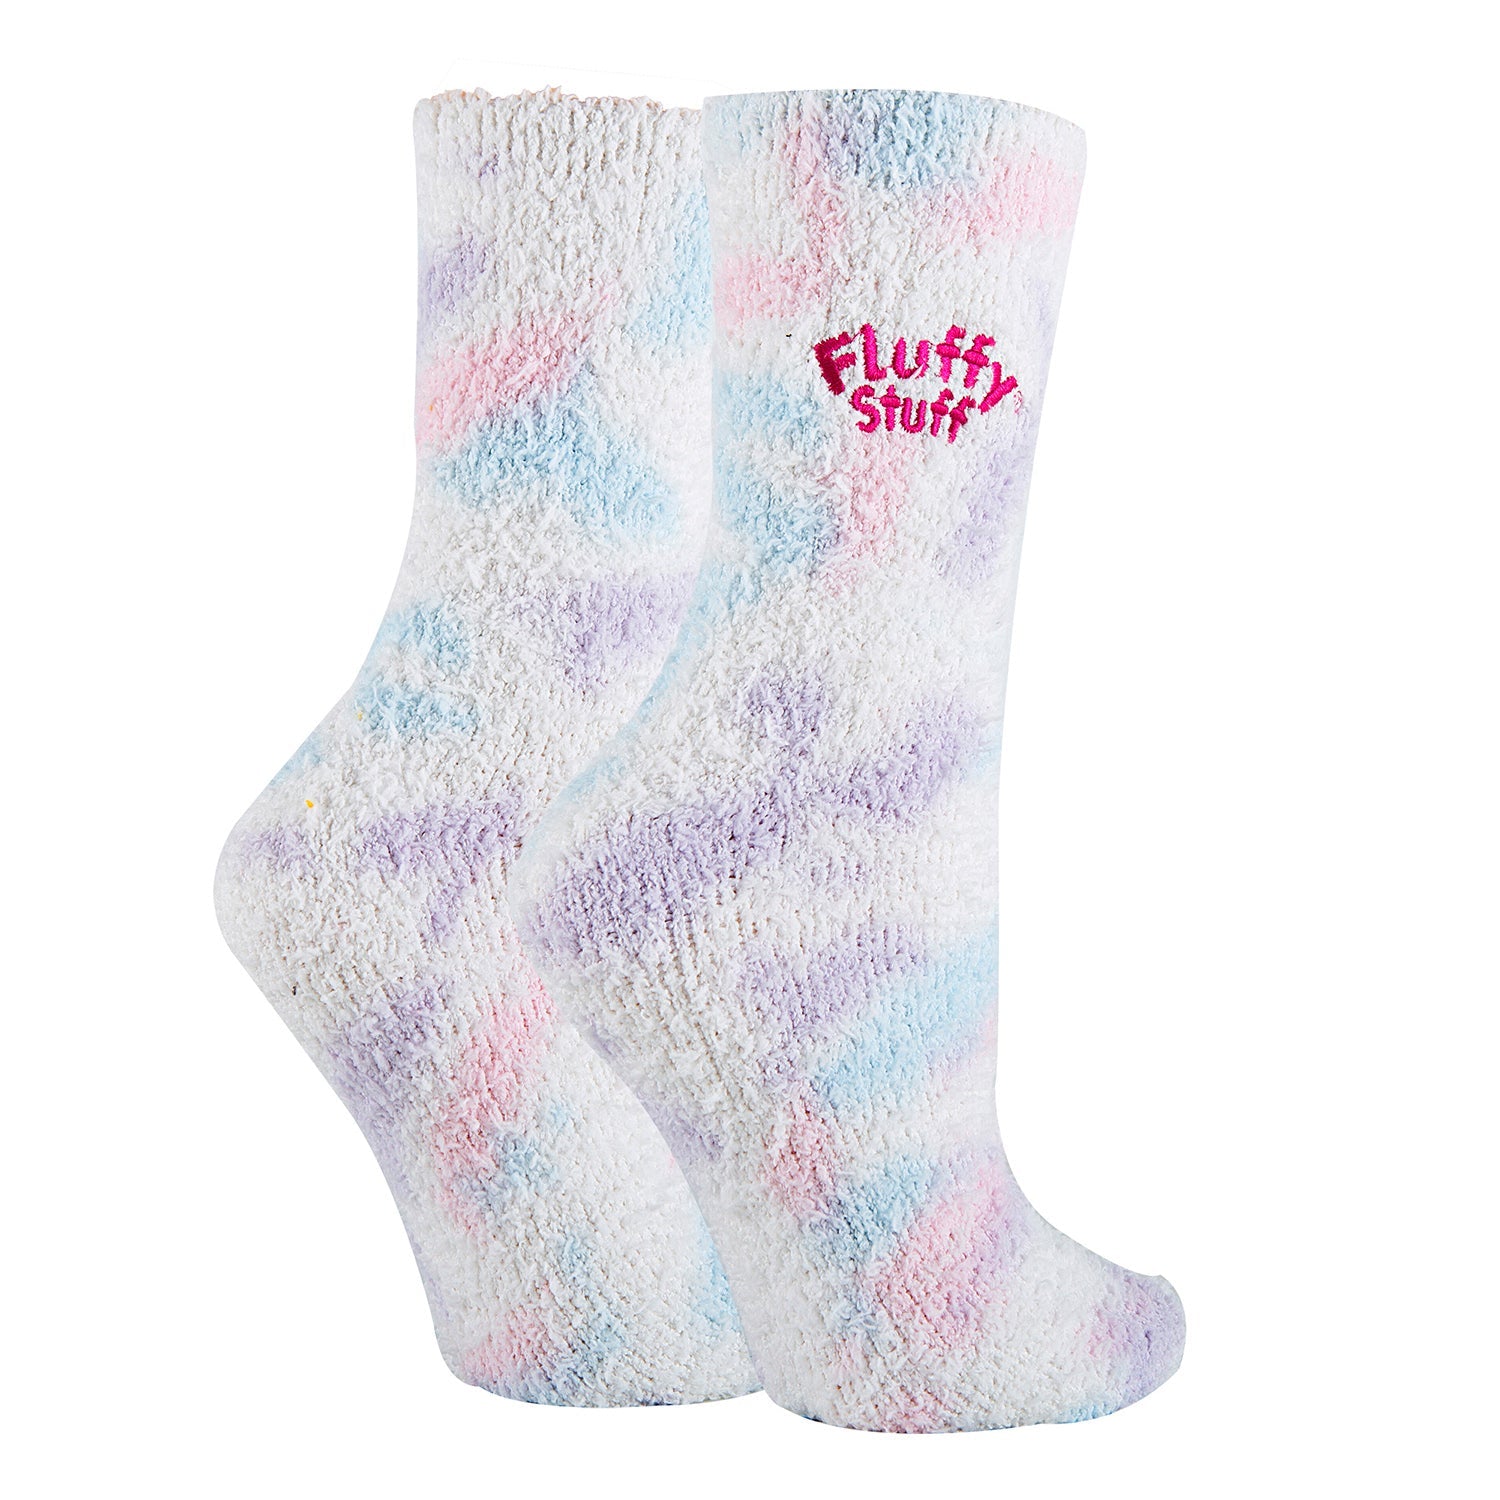 Fuzzy Socks For Women, Add More Fuzz